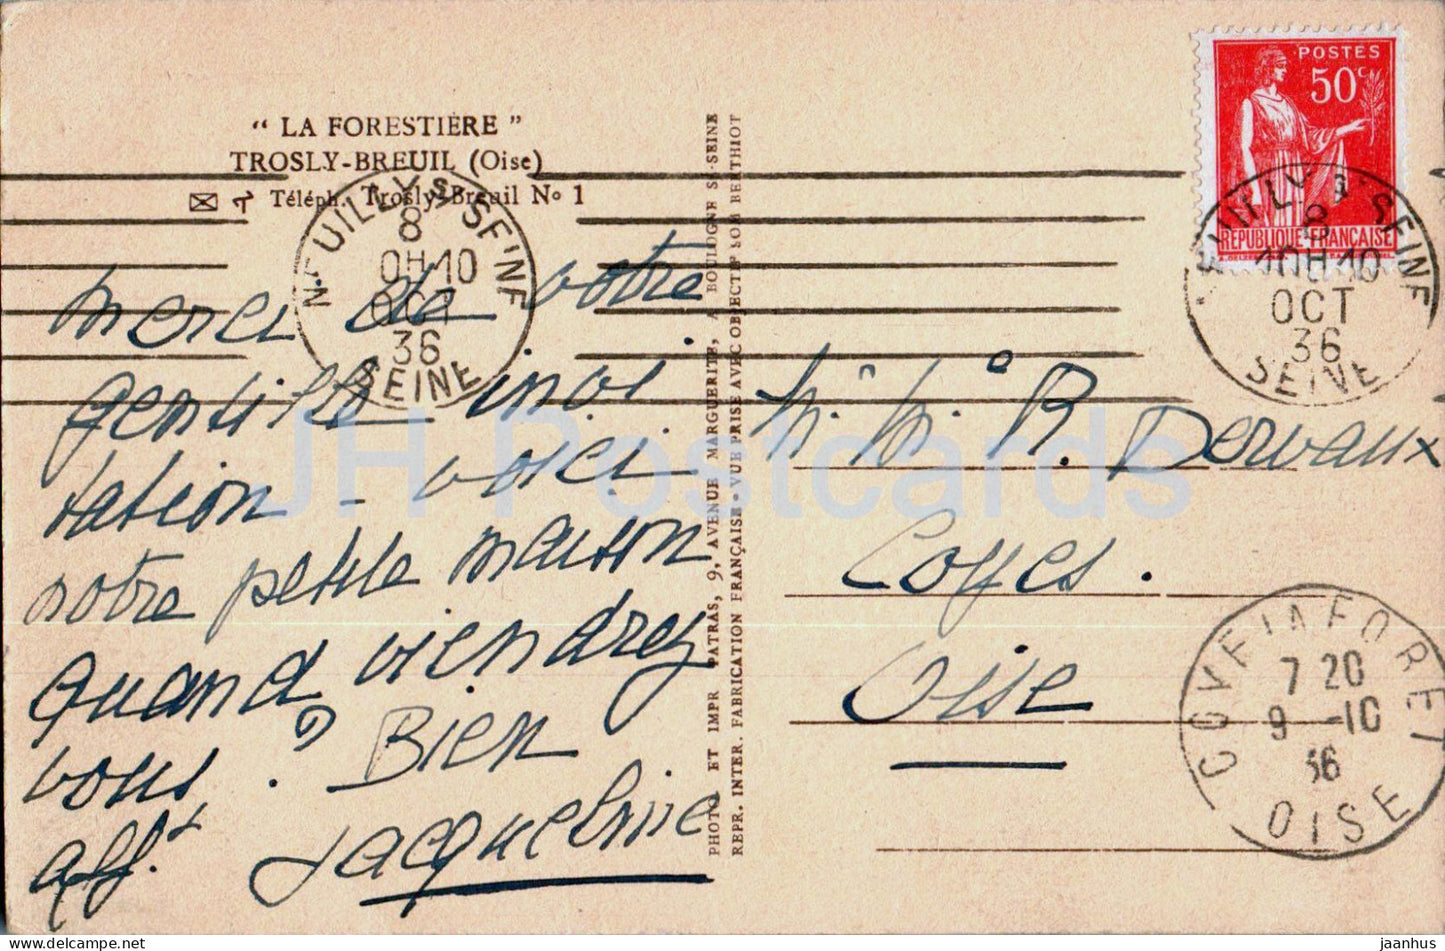 La Forestiere - Trosly Breuil - alte Postkarte - 1936 - Frankreich - gebraucht 